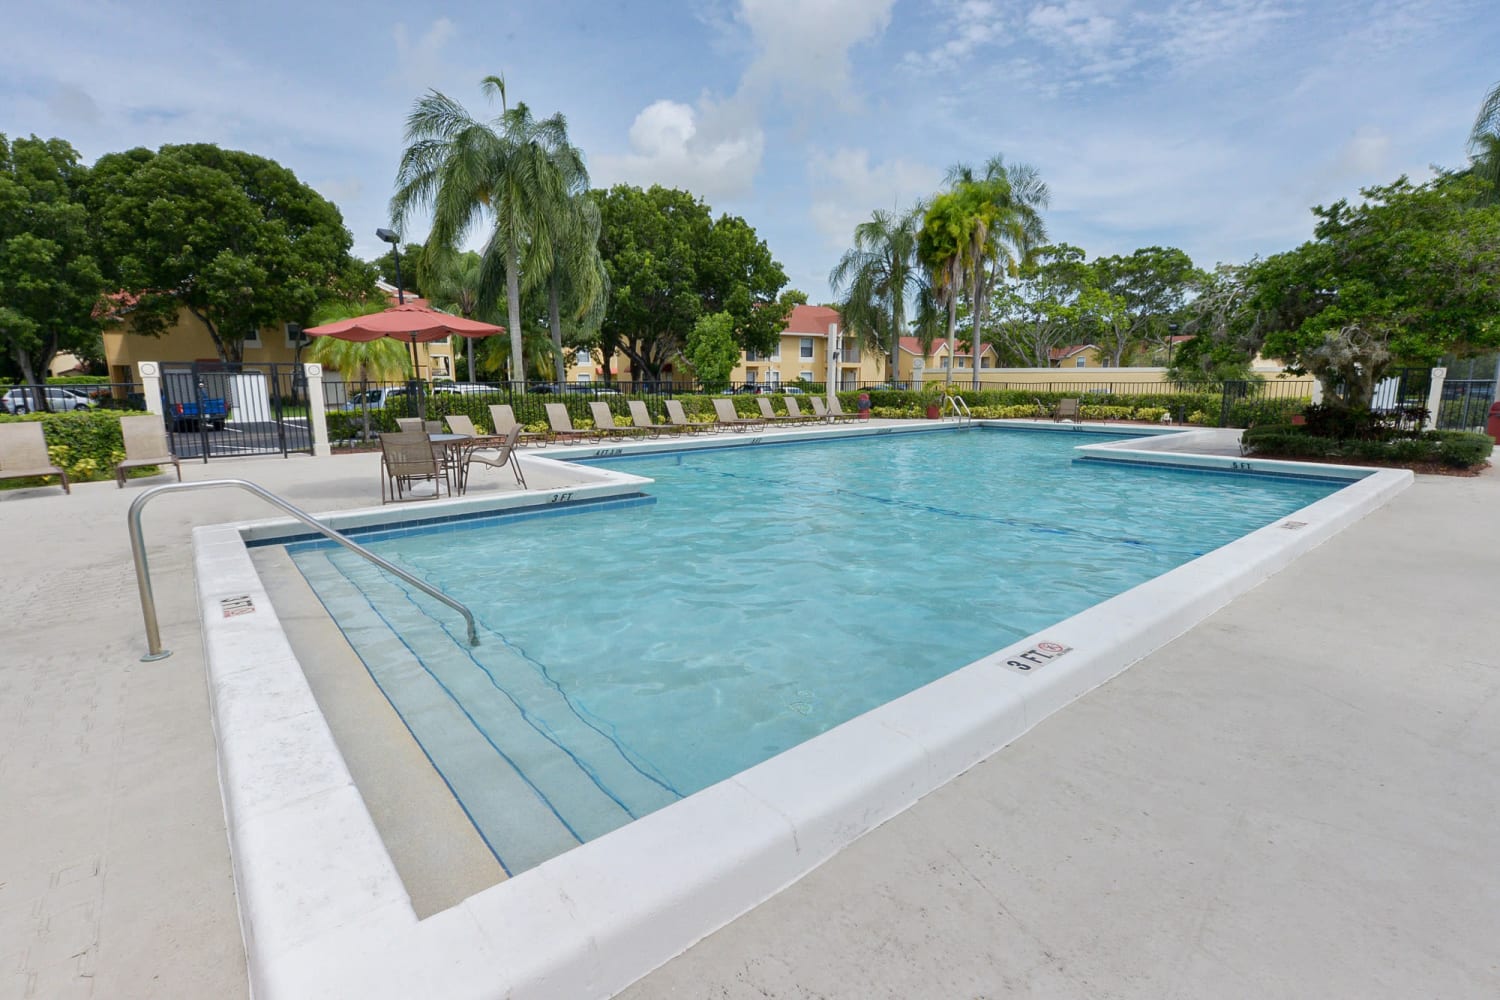 Swimming pool at Savannah Place Apartments & Townhomes in Boca Raton, Florida